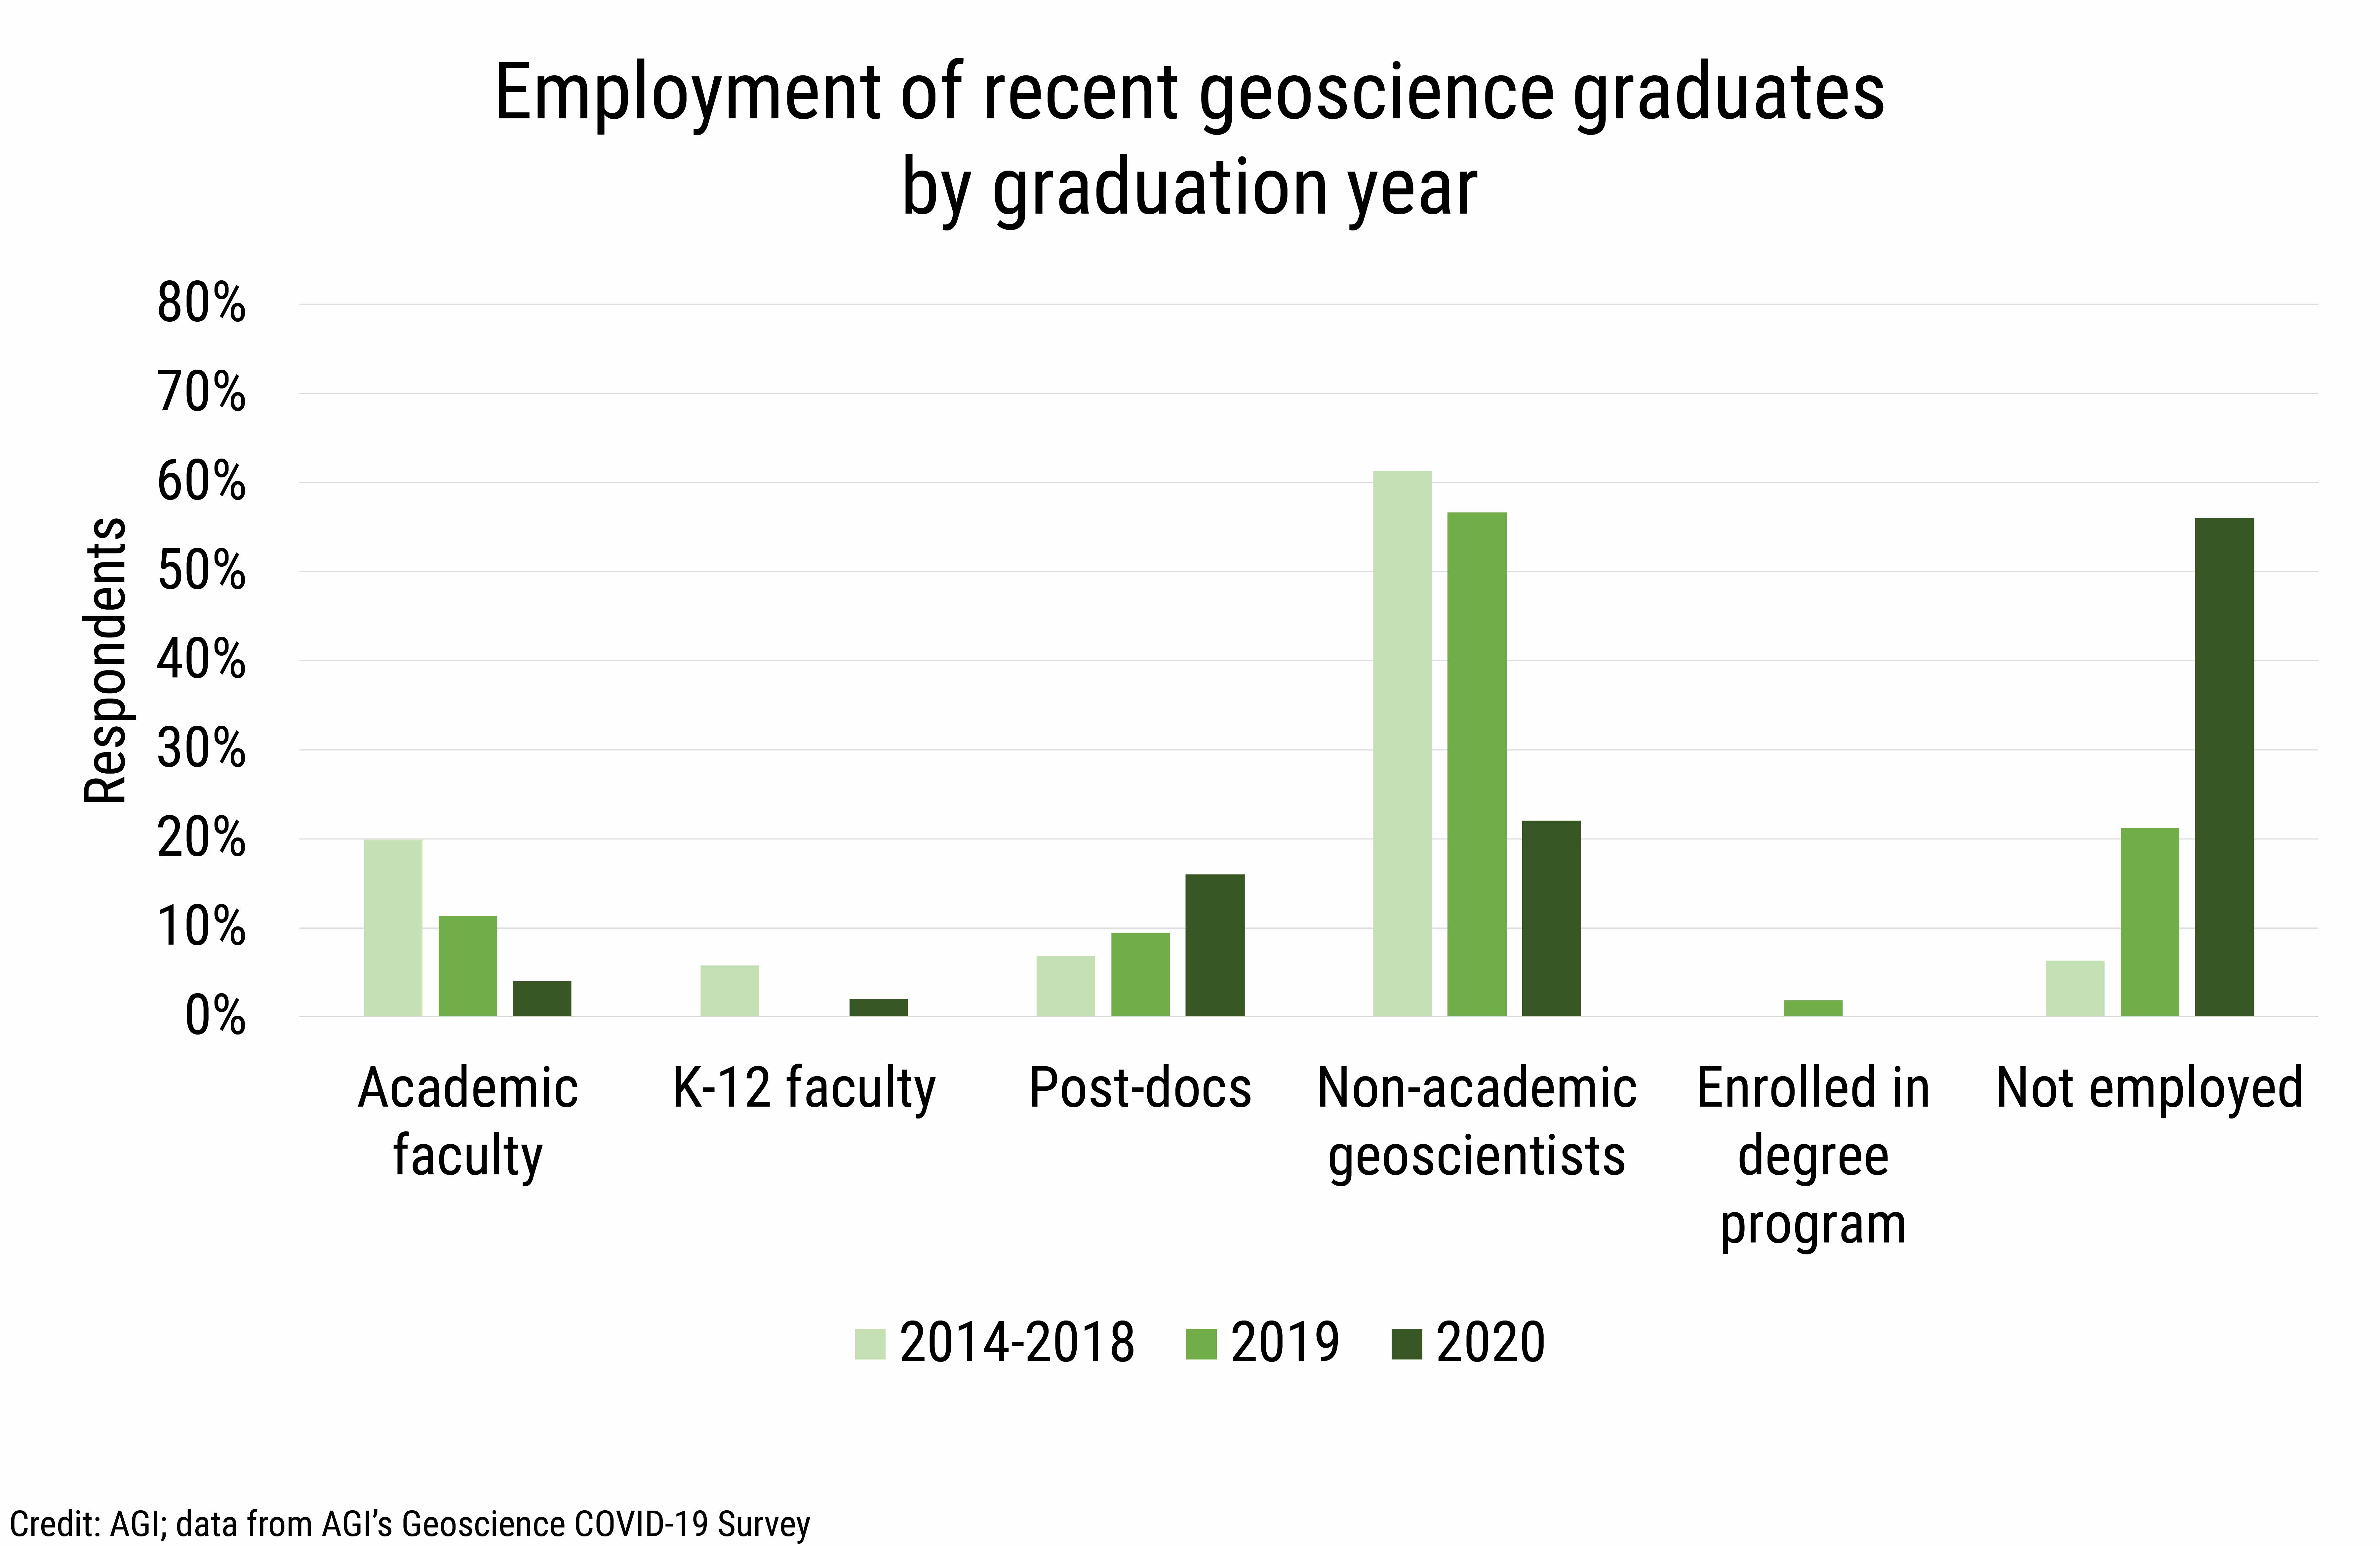 DB_2020-019 chart 01: Employment of recent geoscience graduates by graduation year (credit: AGI; data from AGI’s Geoscience COVID-19 Survey)